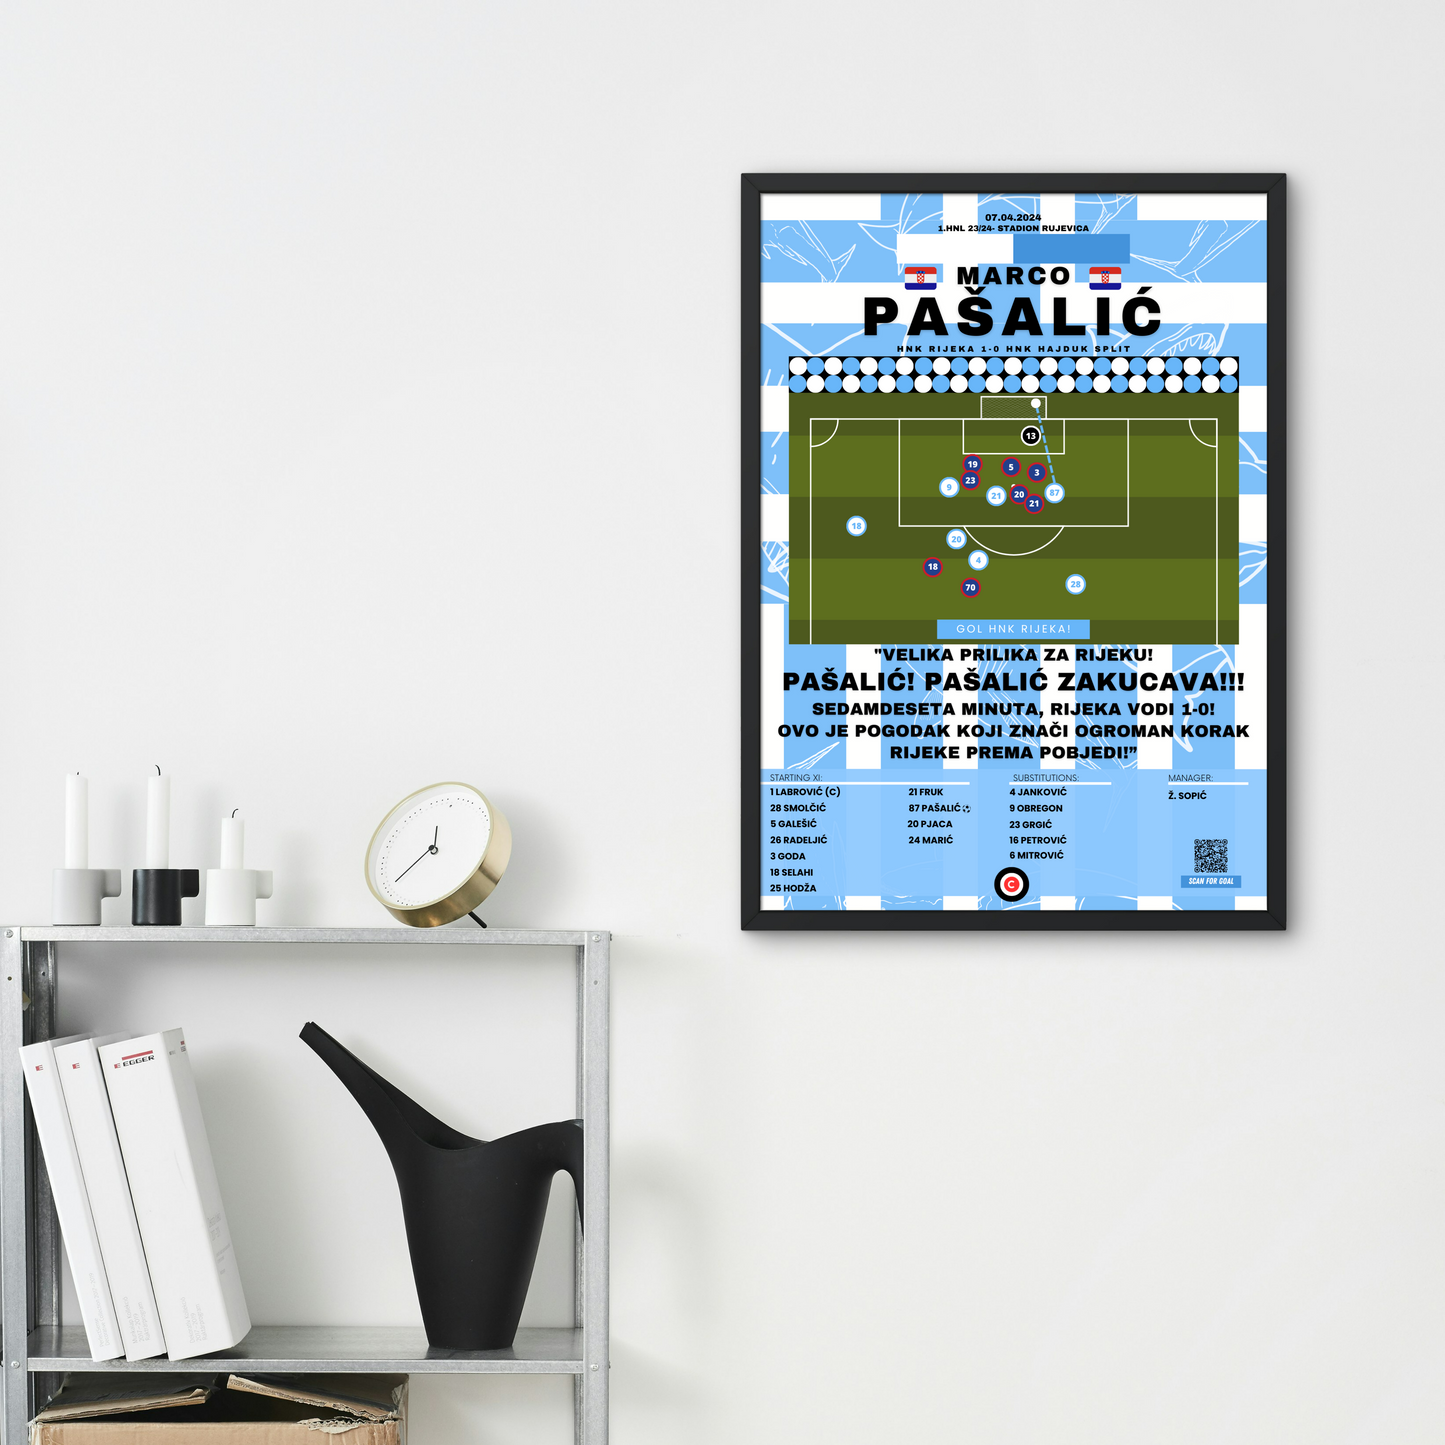 Marco Pašalić vs Hajduk Split- 1.HNL 23/24- HNK Rijeka